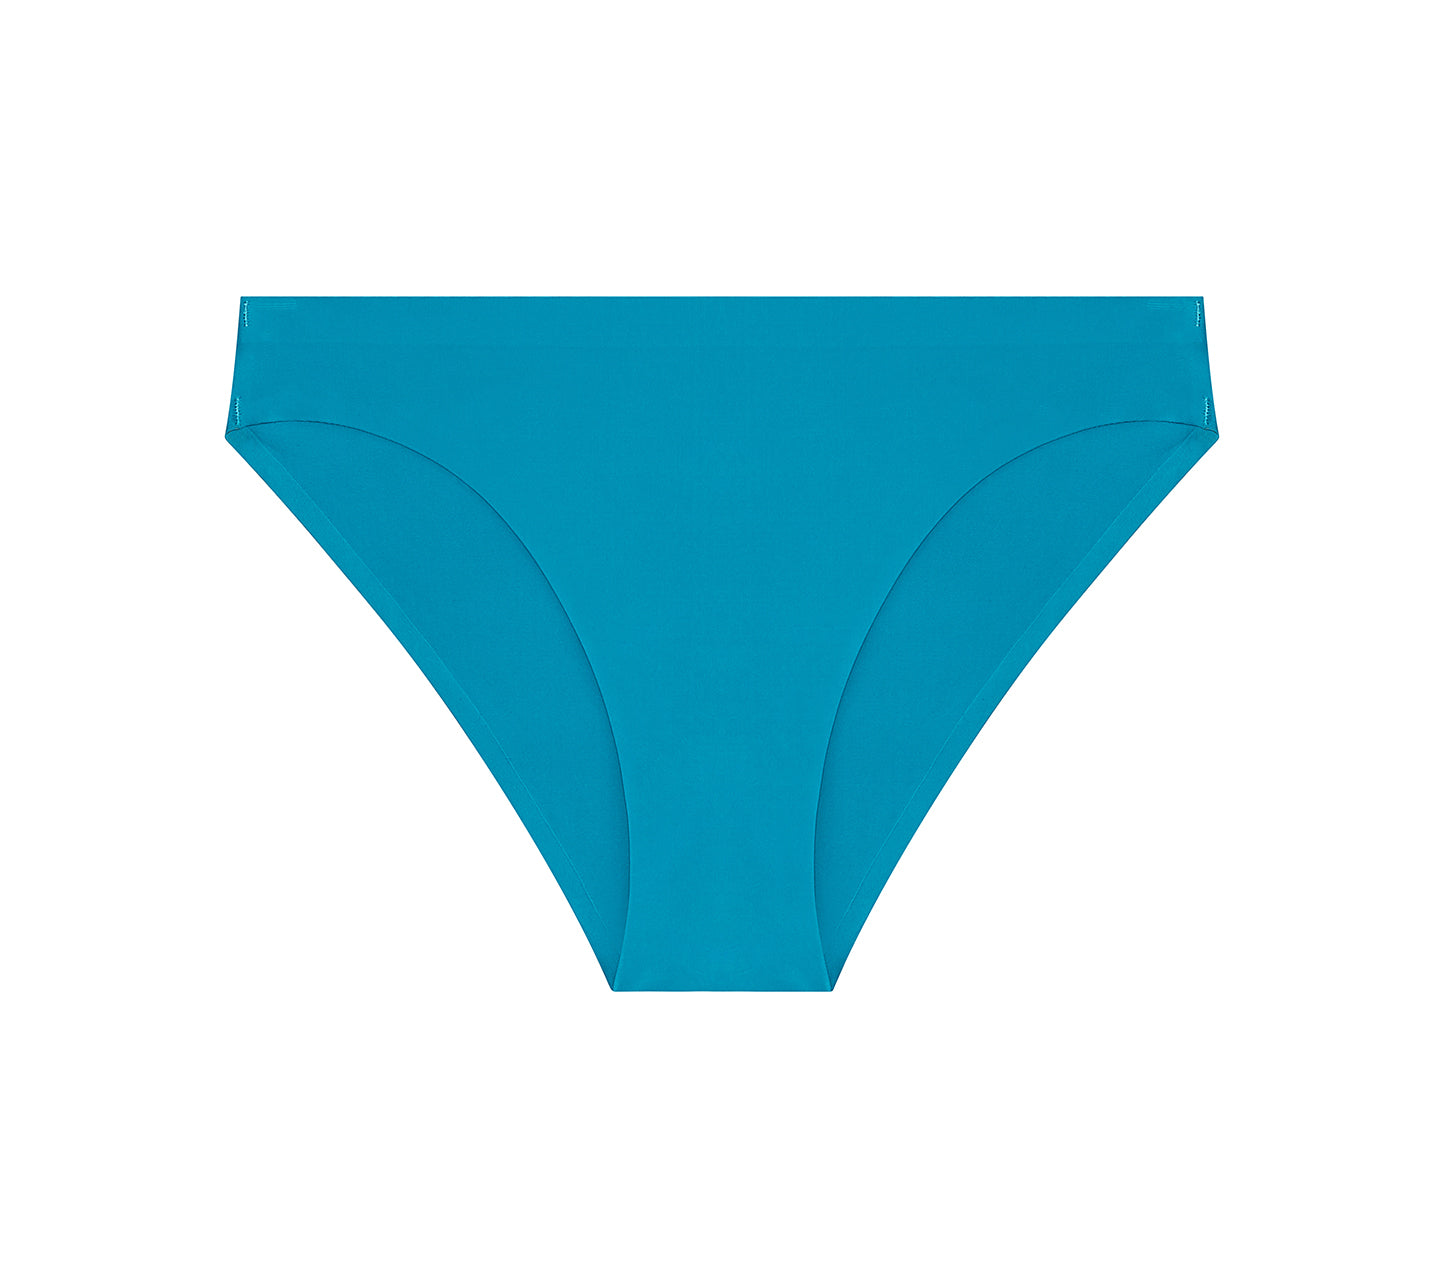 TESOON Seamless Underwear for Women Bikini Panties 6 Pack 